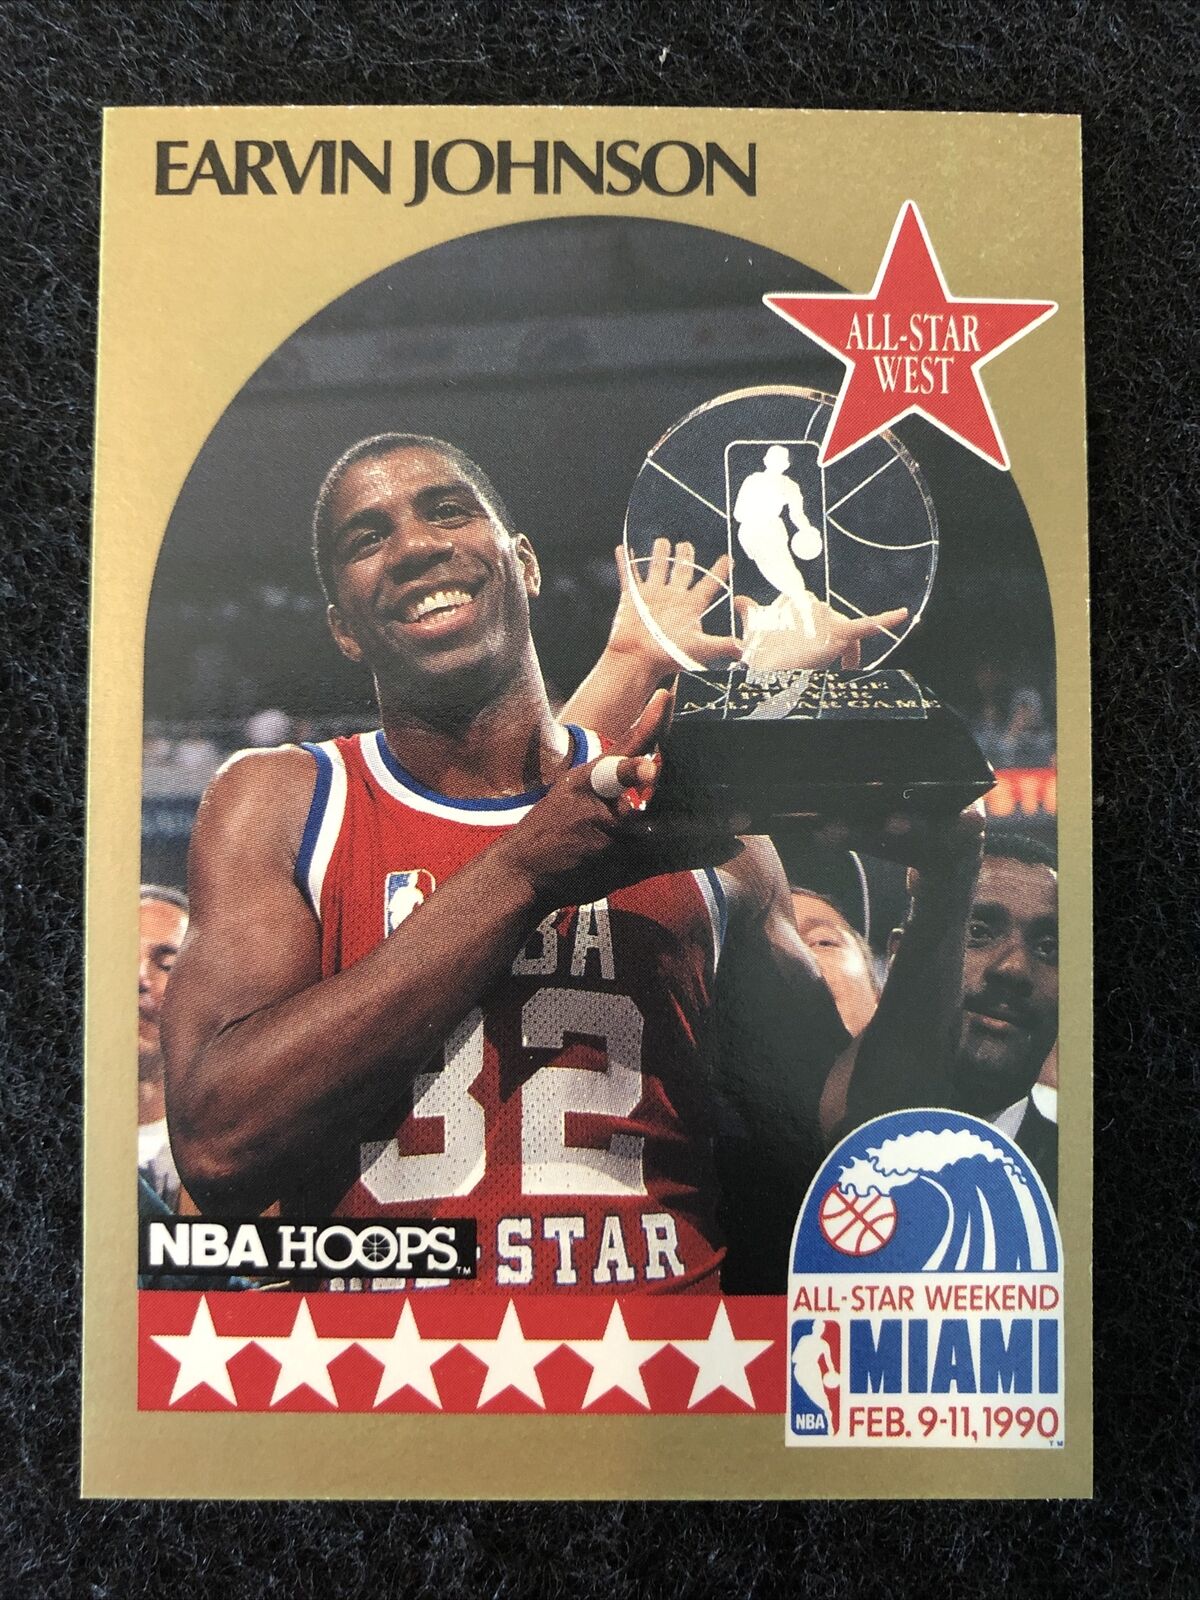 1991-92 Topps Charles Barkley Gold Foil NBA All Star card